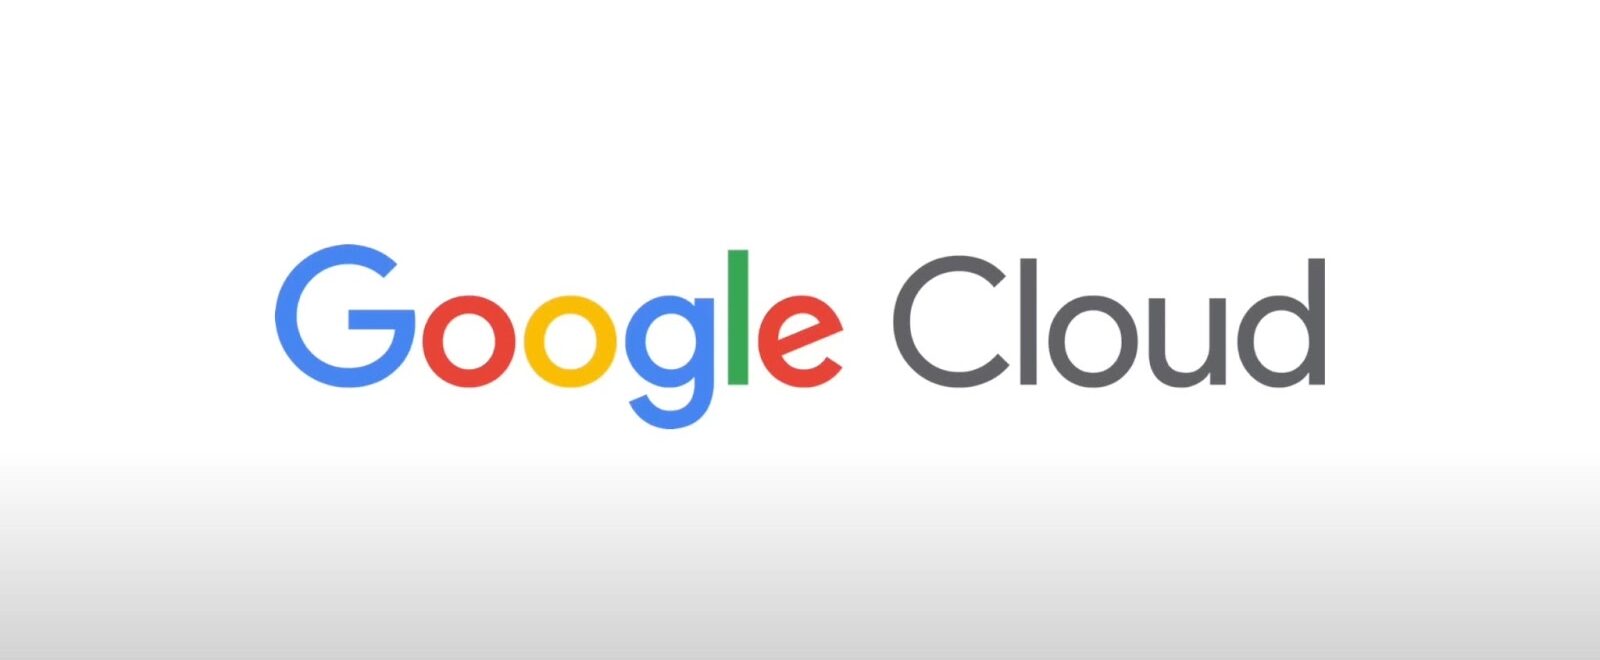 Google Cloud inscription on a white background